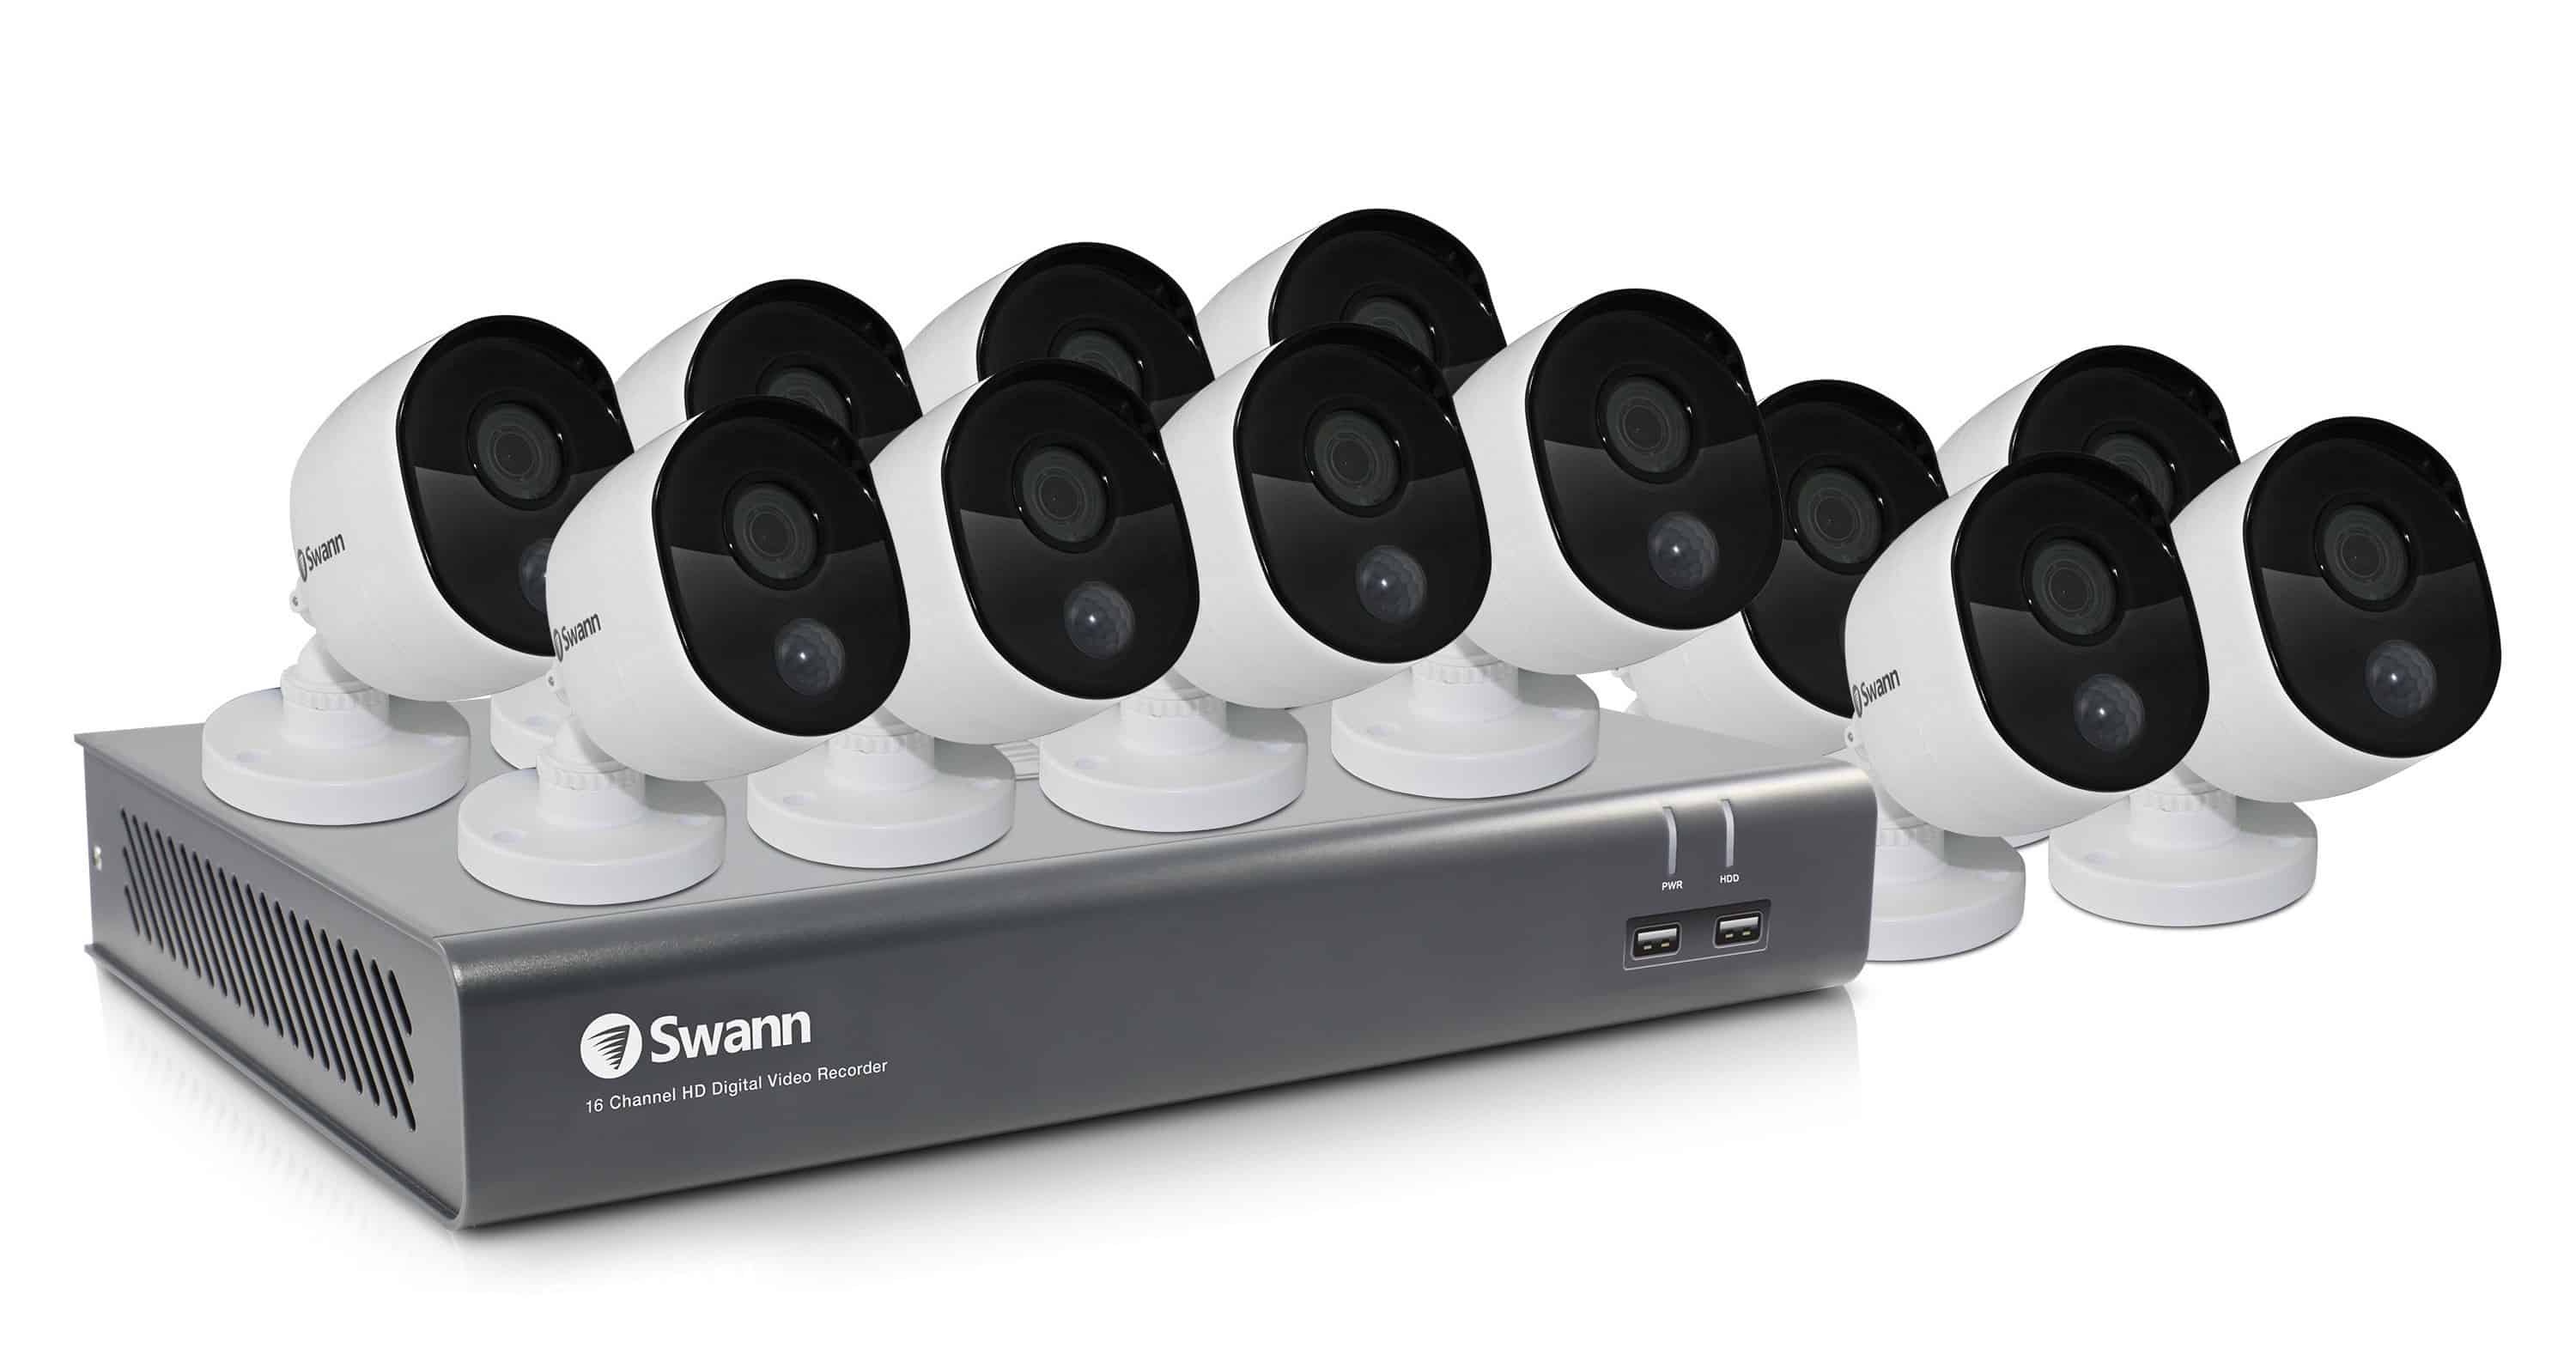 swann camera system